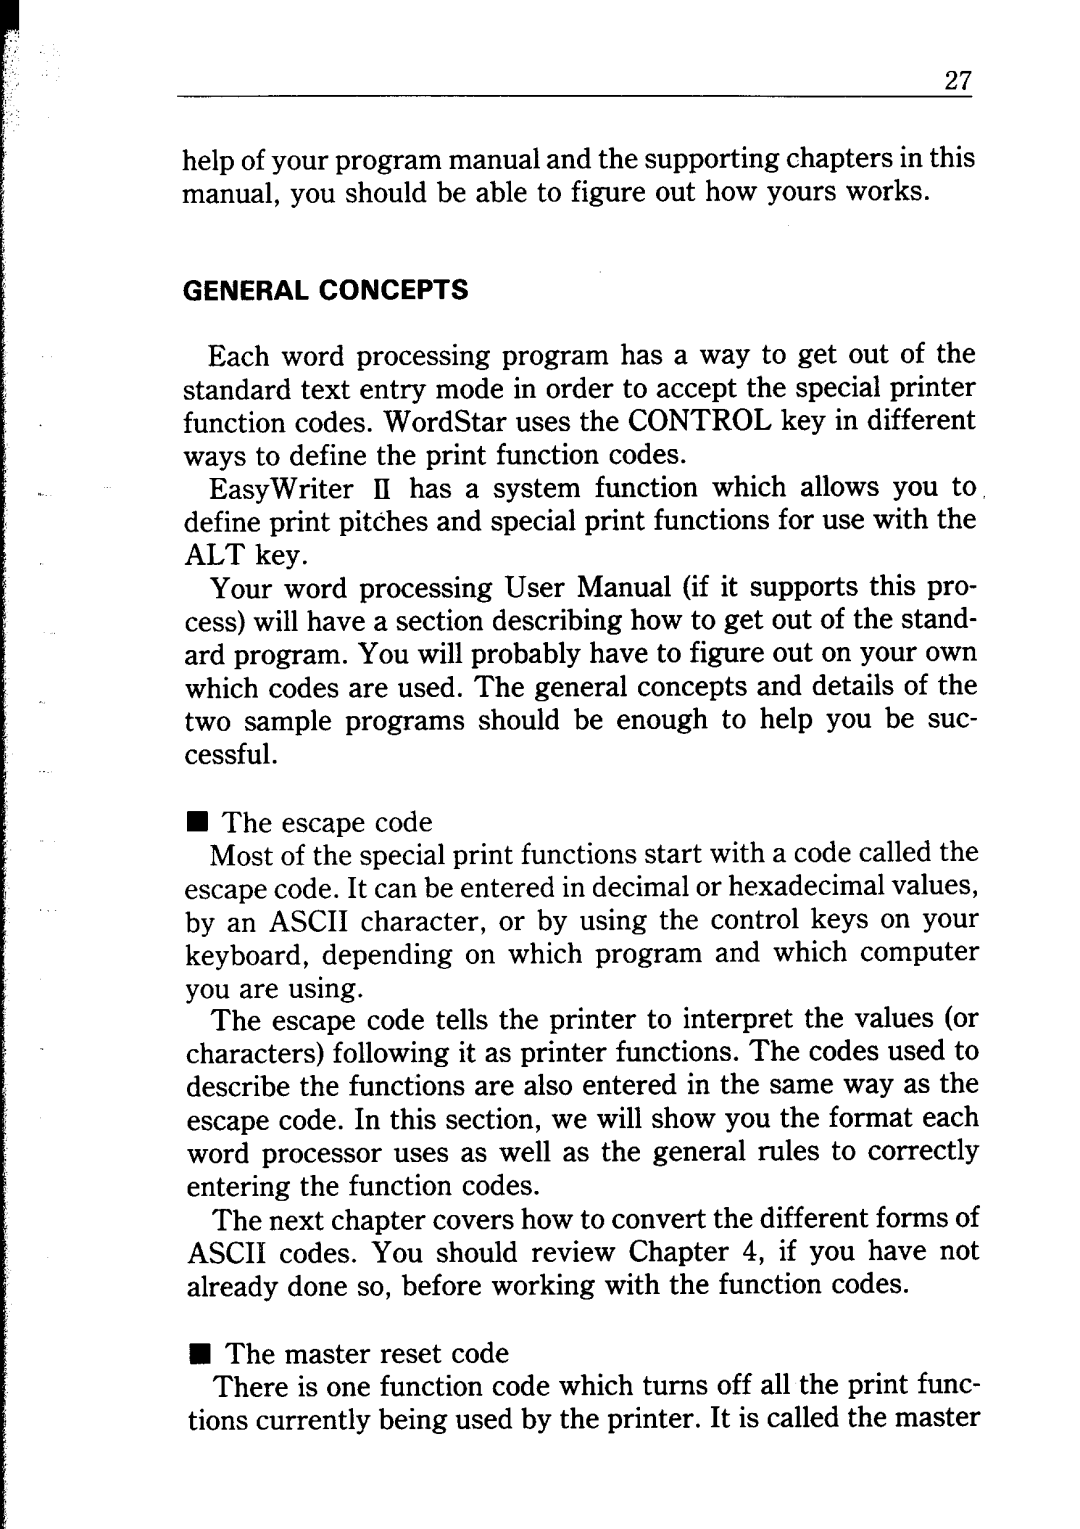 Star Micronics NB24-10/15 user manual W The escape code 